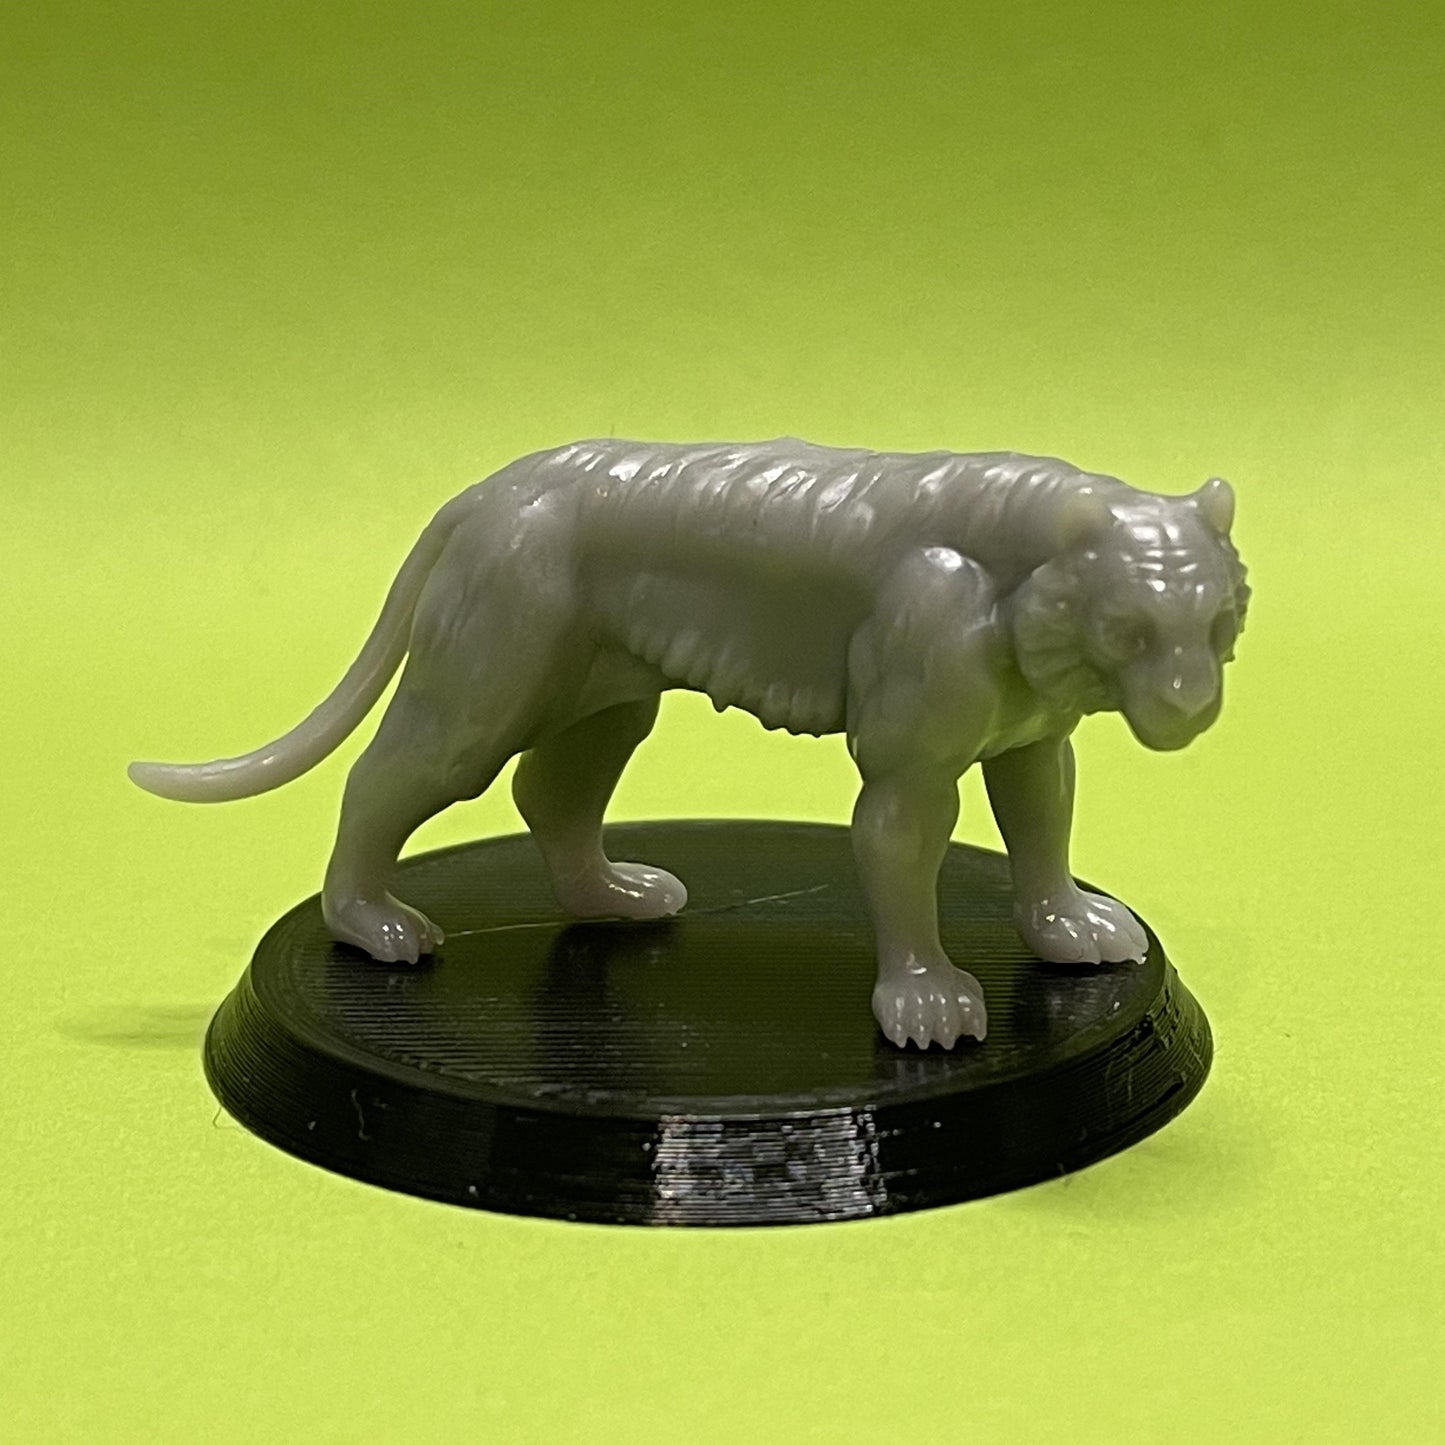 Tiger Miniature